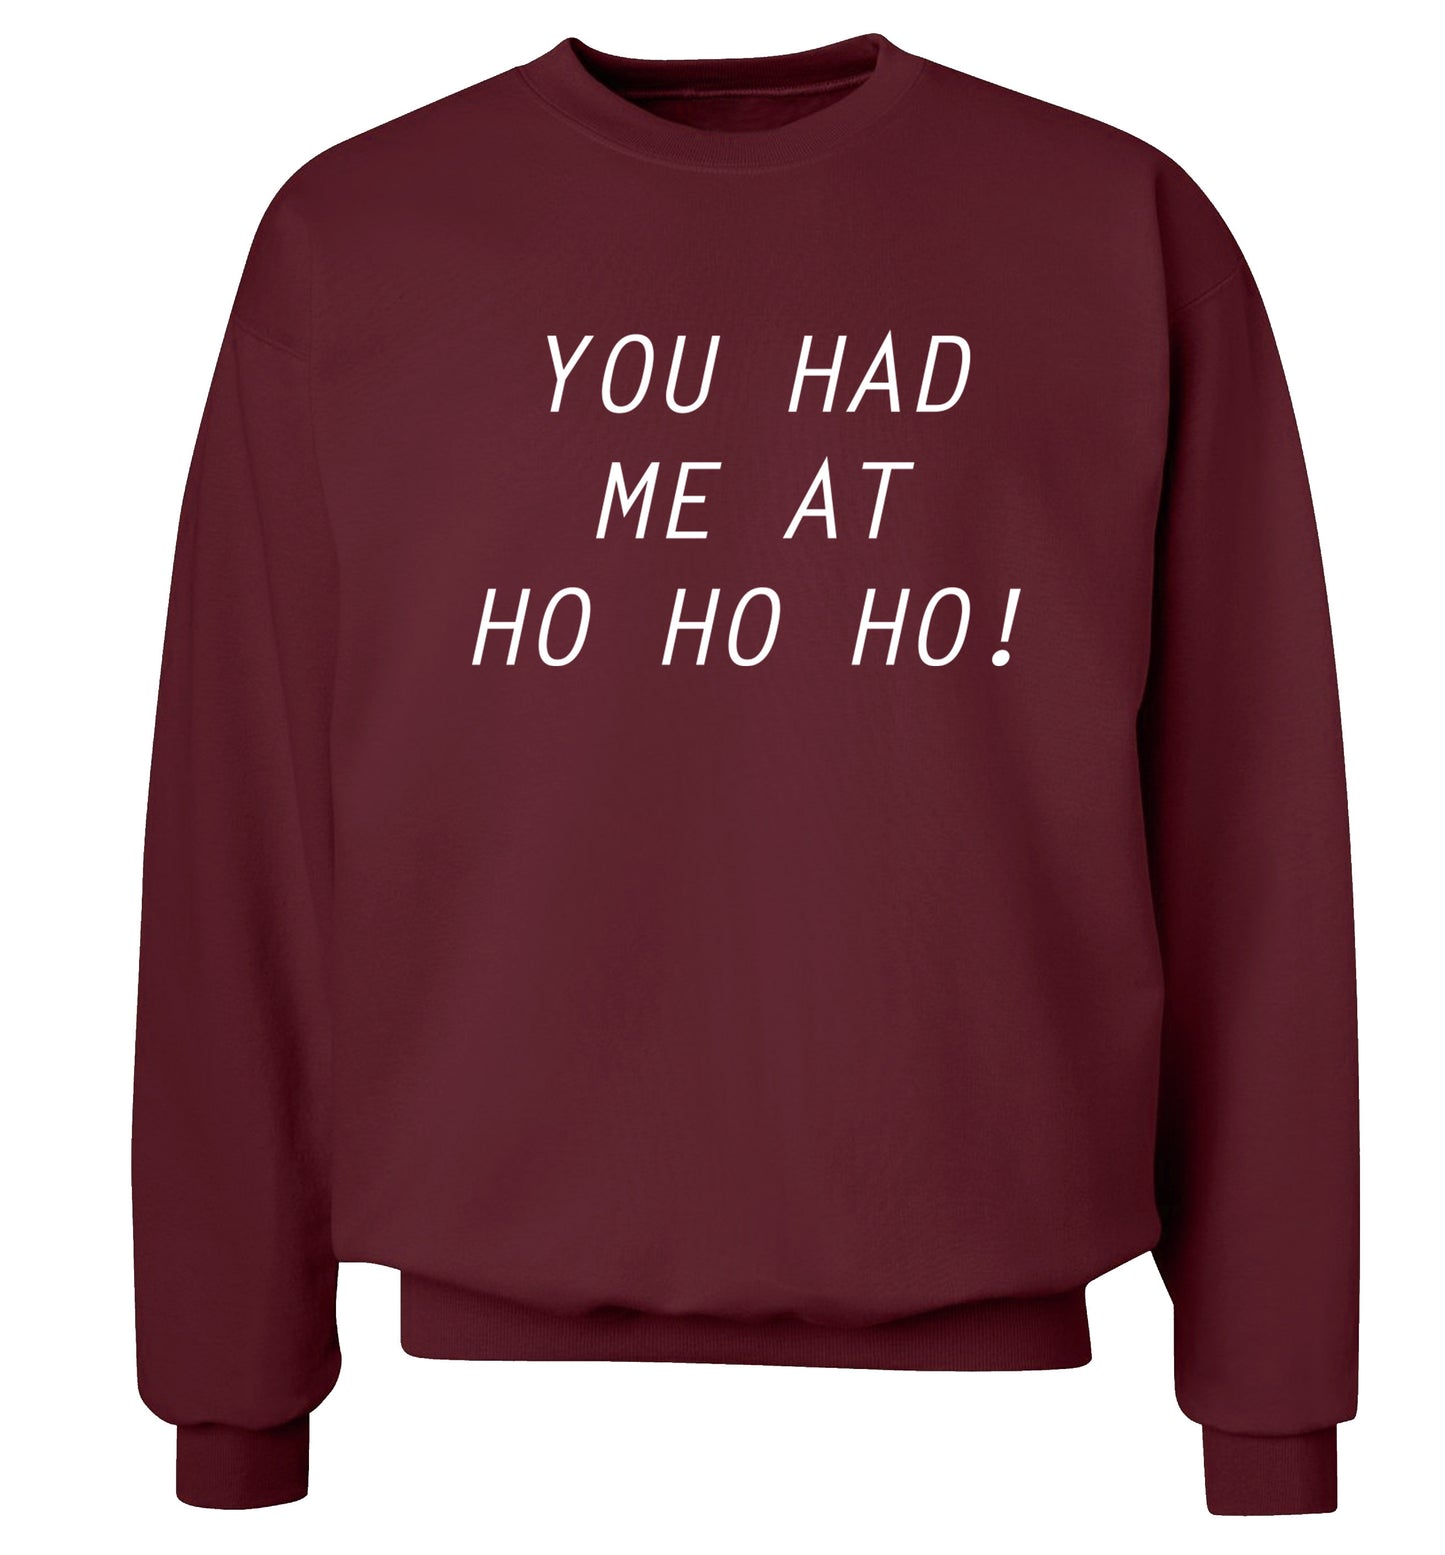 You had me at ho ho ho Adult's unisex maroon Sweater 2XL